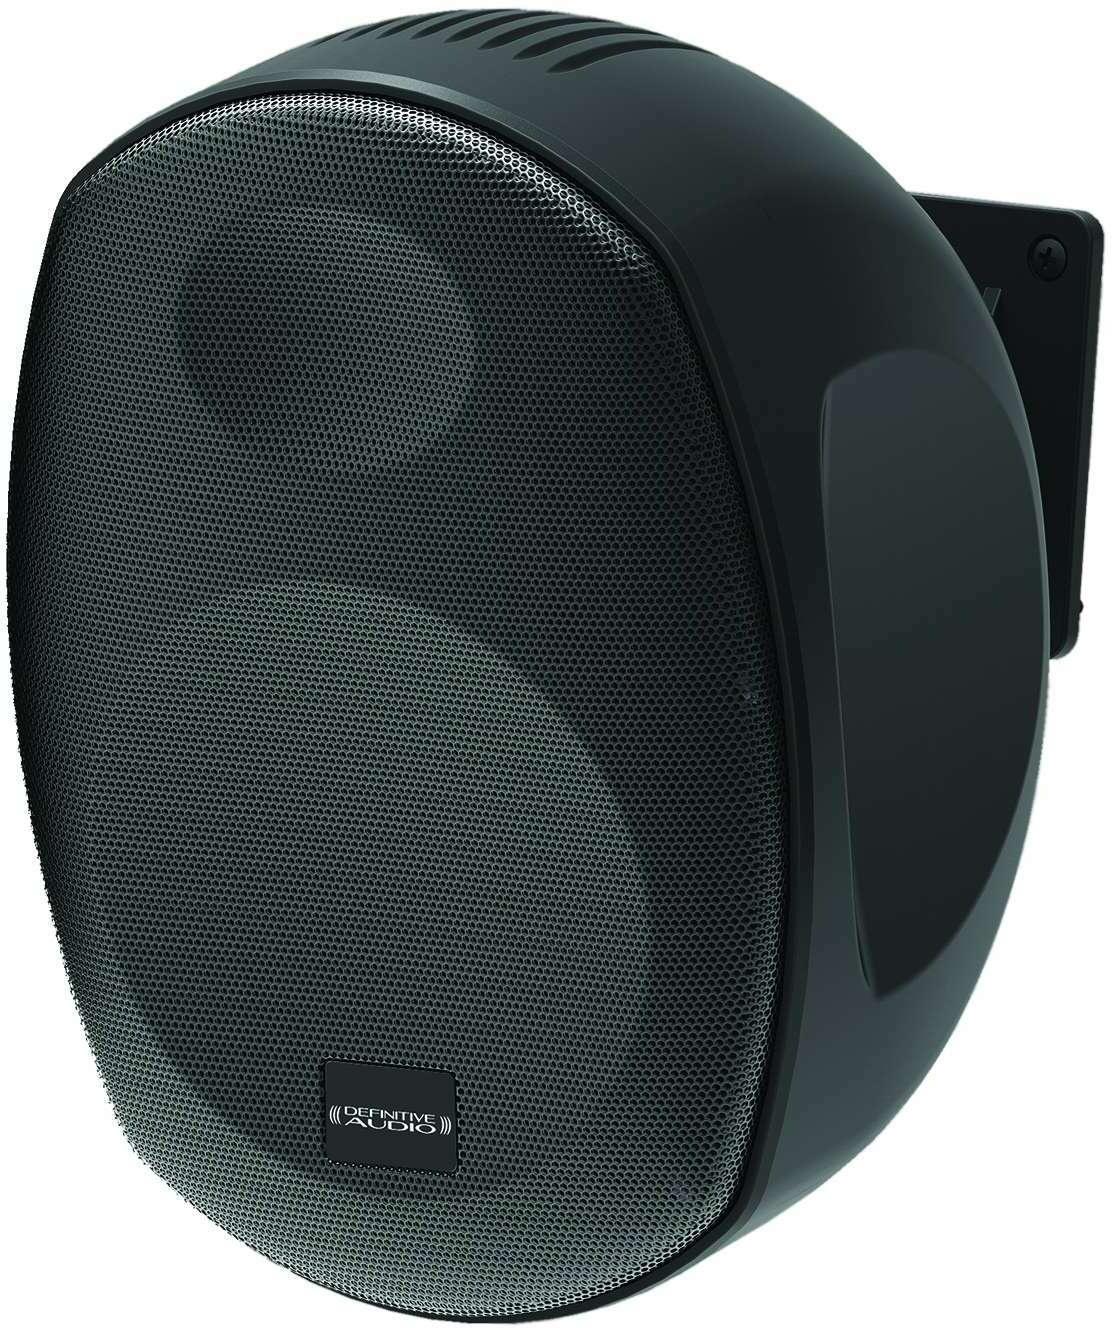 Definitive Audio Klipper 5t Bl - Installation speakers - Main picture